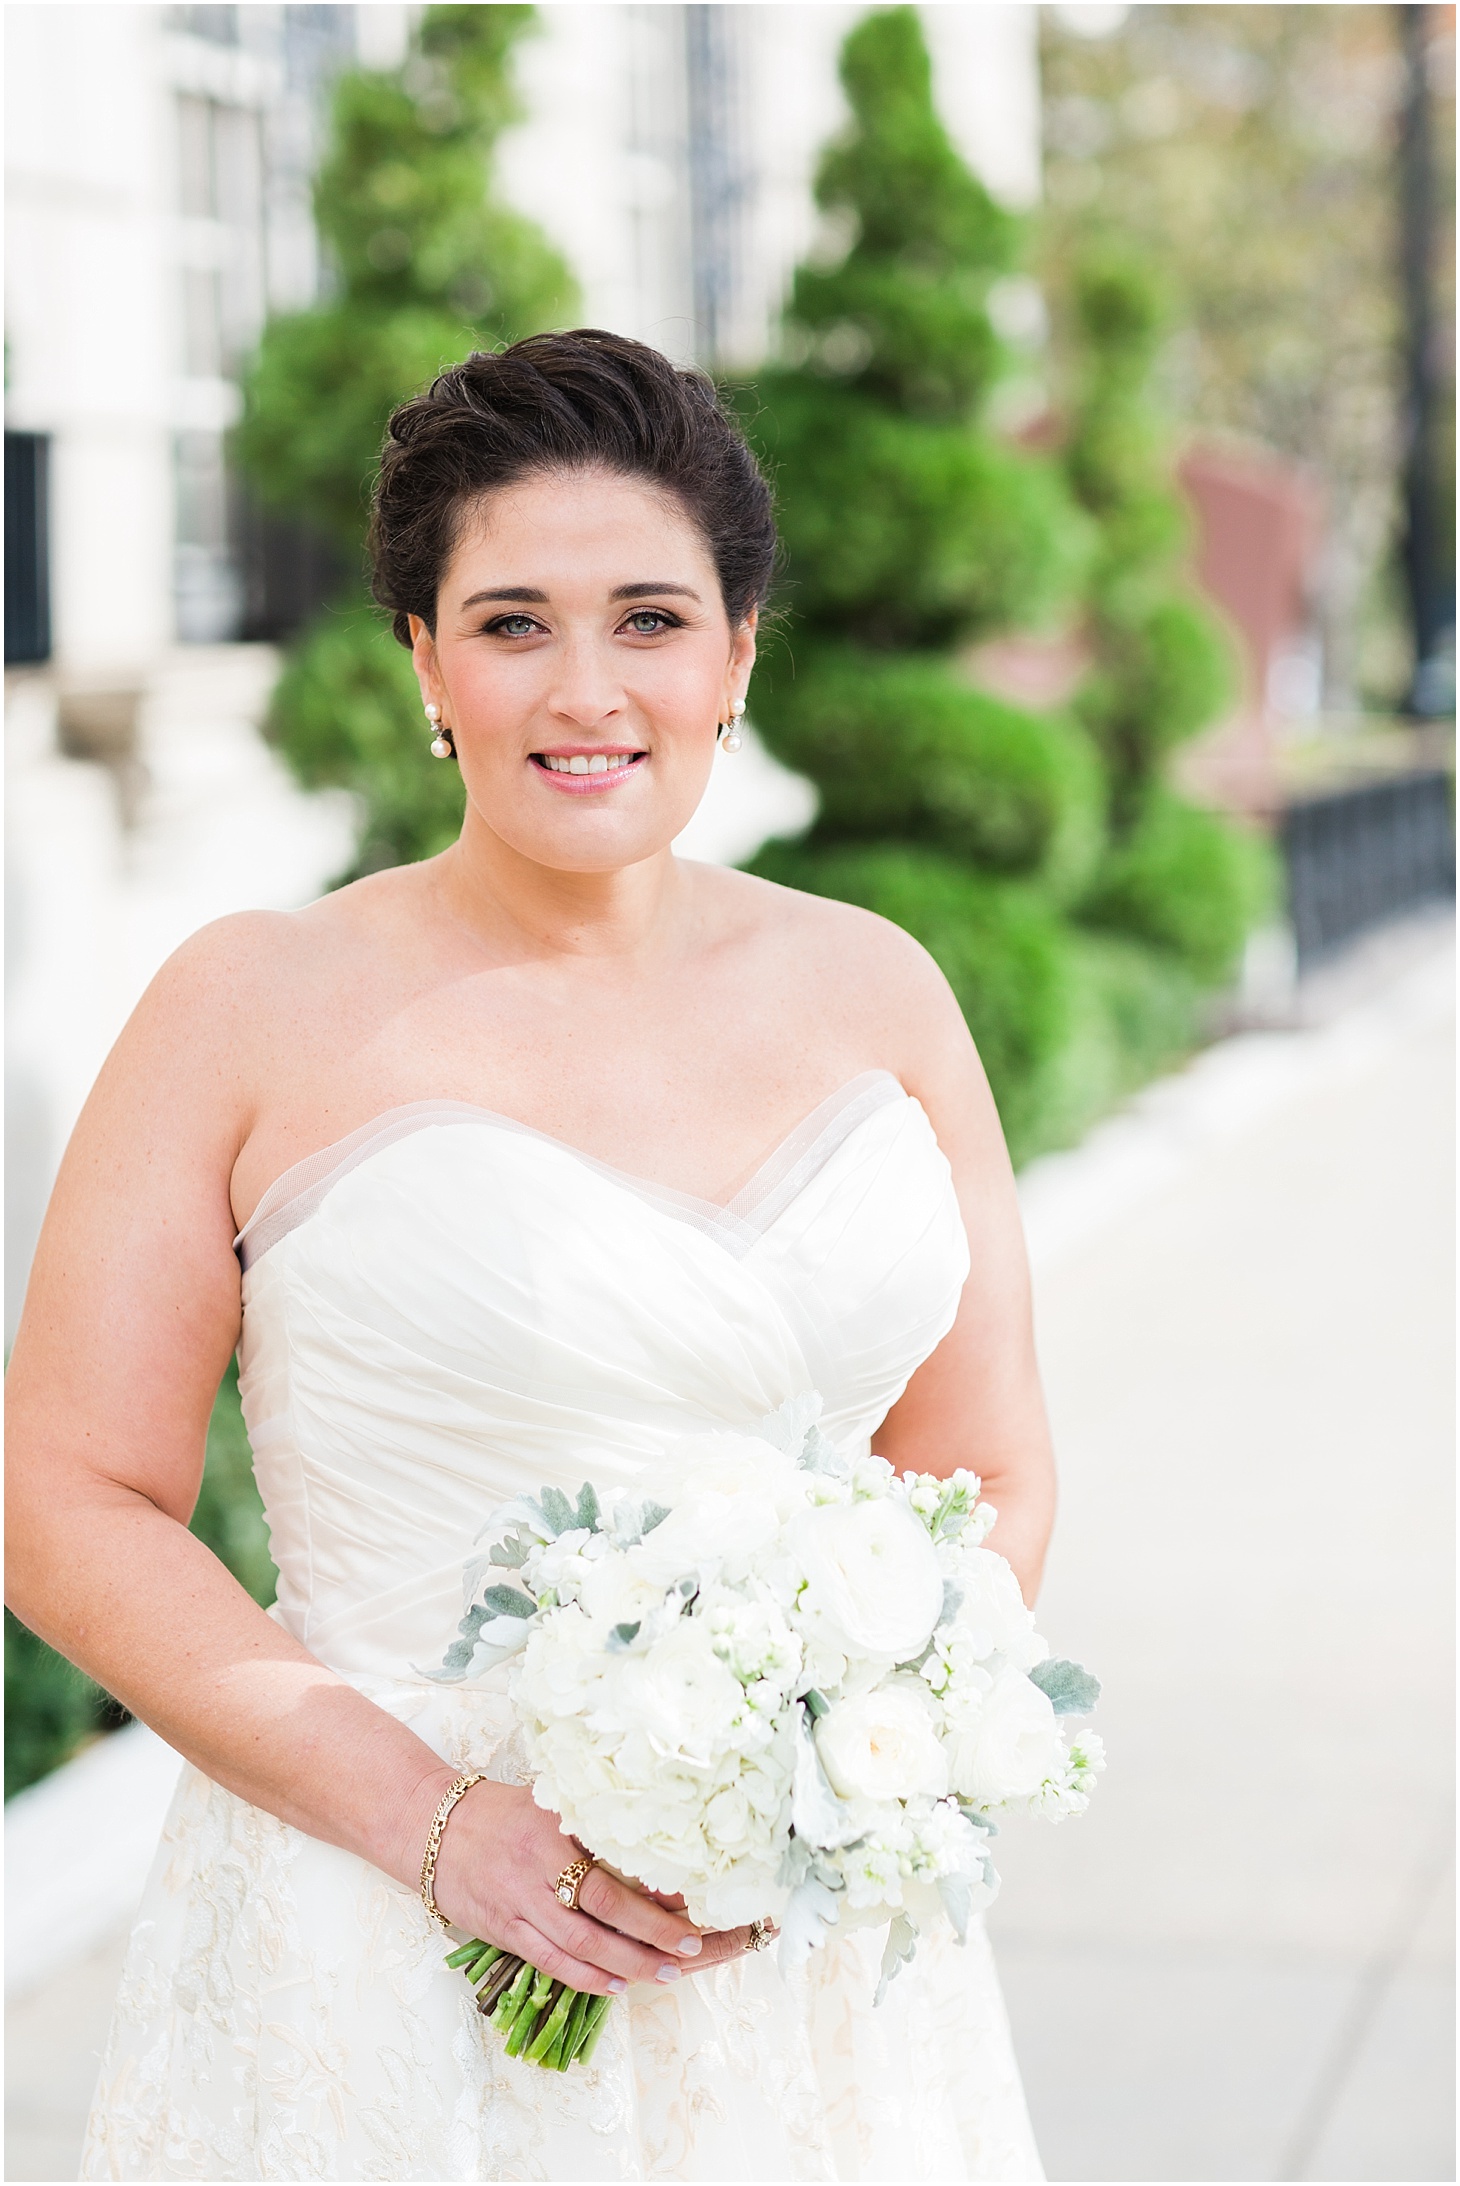 Bridal Portrait at the Hay-Adams Hotel | Winter Brunch Wedding at Hay-Adams Hotel in DC | Sarah Bradshaw Photography